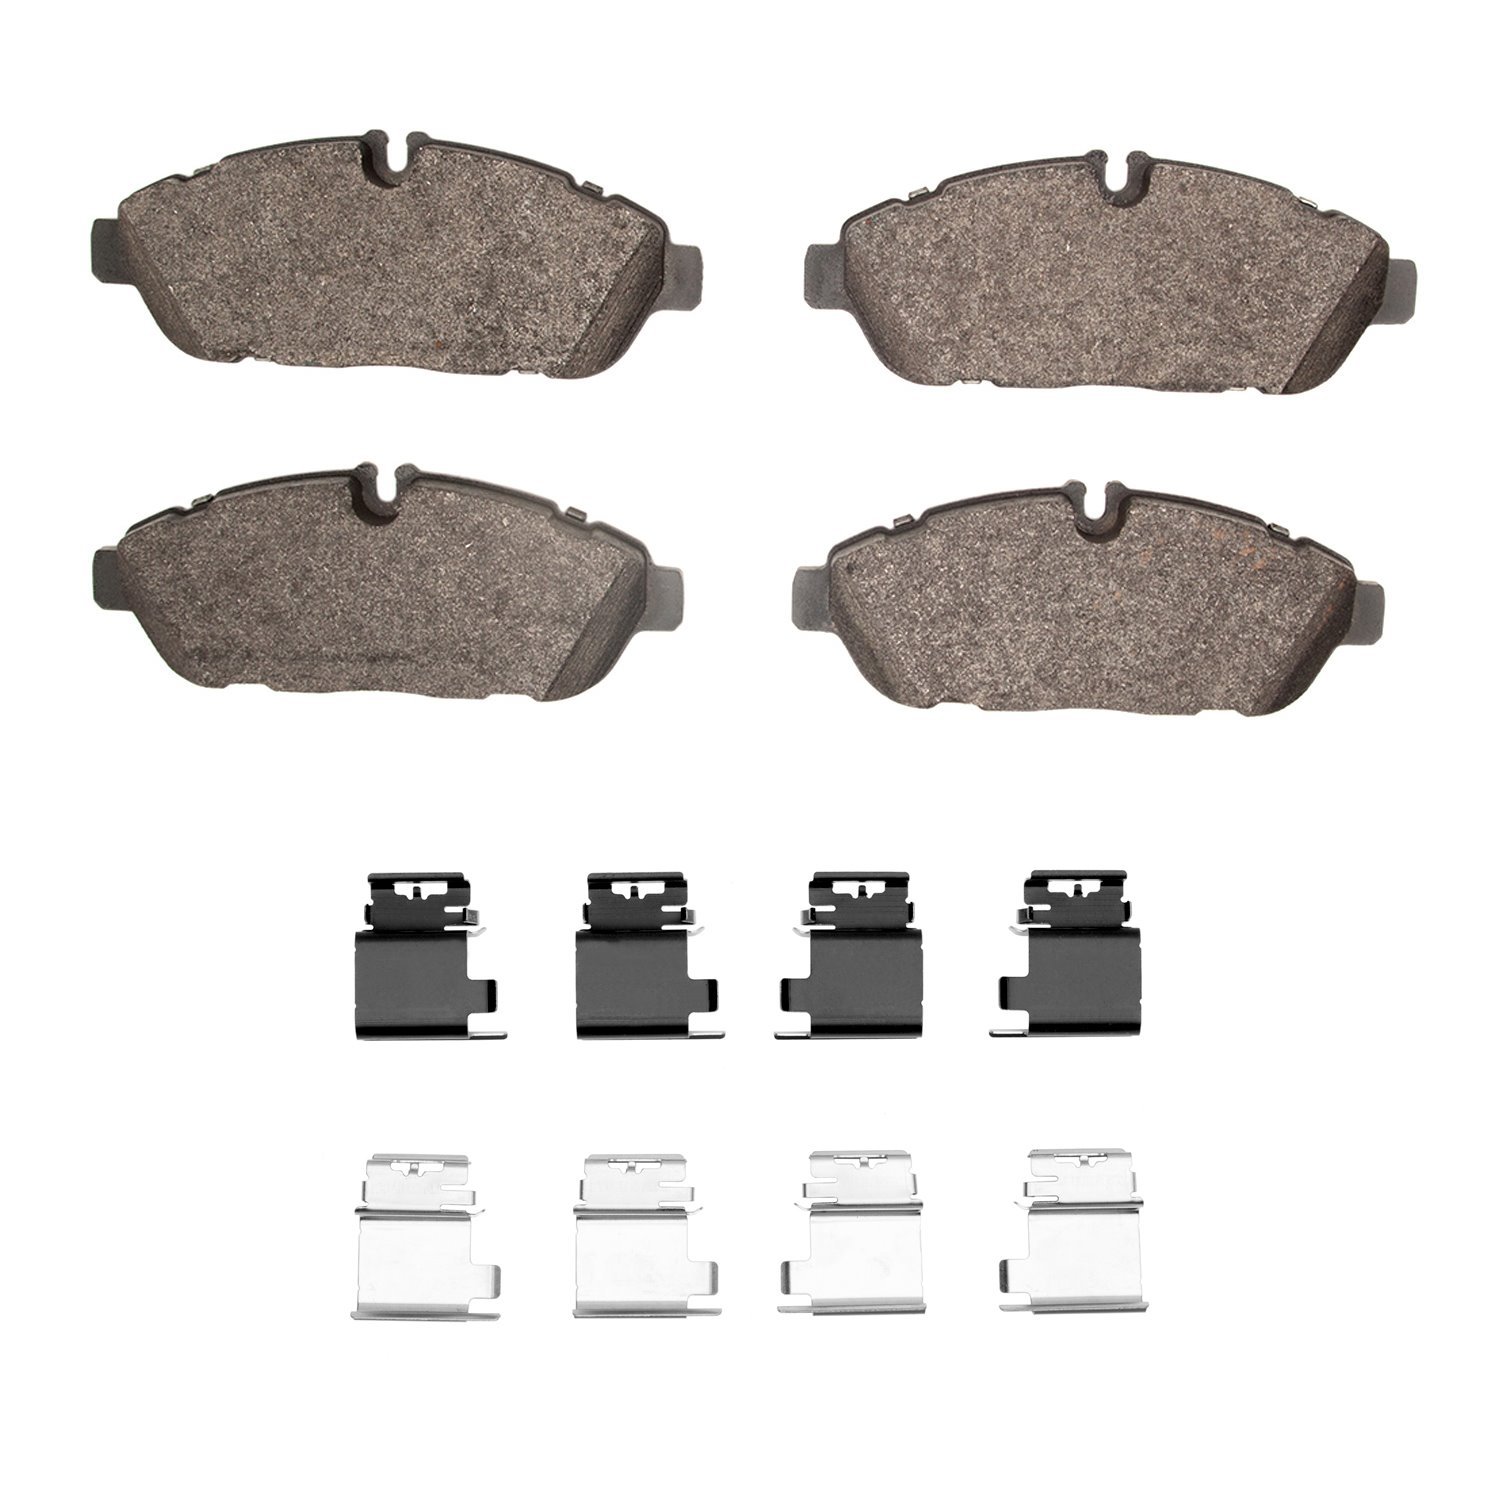 1551-2301-01 5000 Advanced Semi-Metallic Brake Pads & Hardware Kit, Fits Select Ford/Lincoln/Mercury/Mazda, Position: Front